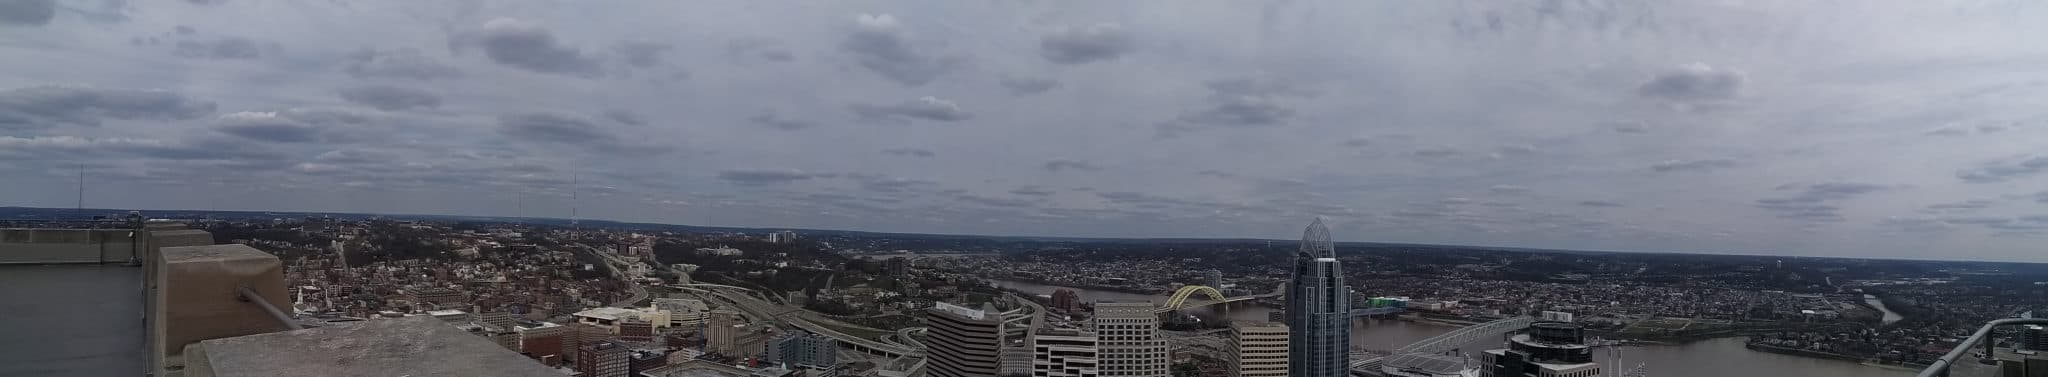 A beautiful 360 view of Cincinnati